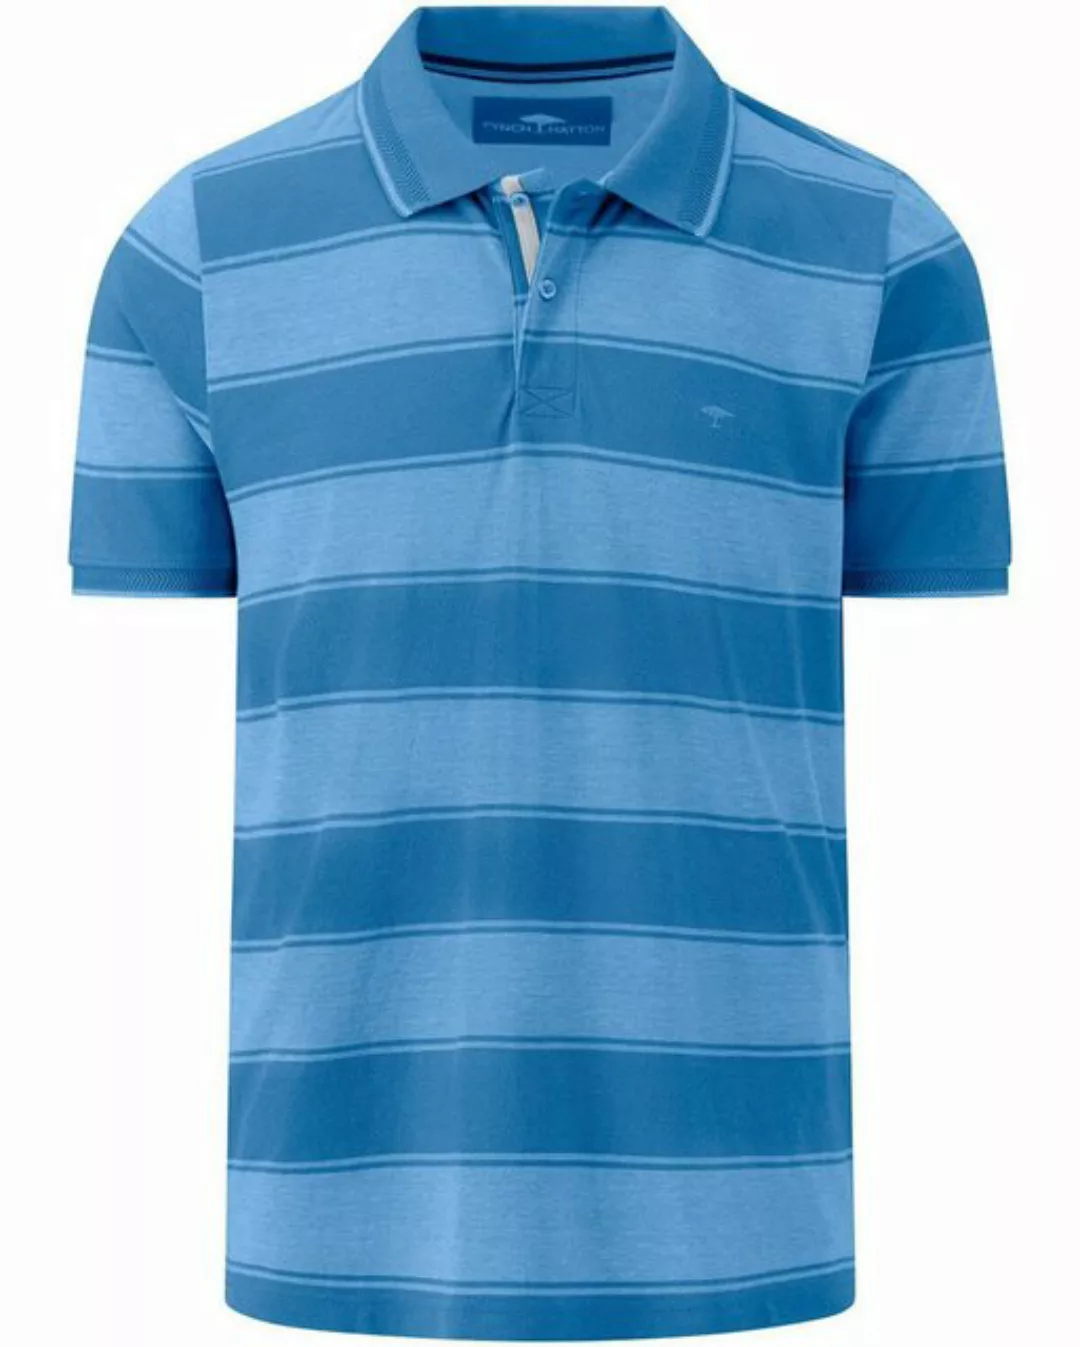 FYNCH-HATTON T-Shirt Fynch-Hatton / He.Polo / Polo, 2-Tone, fine stripe günstig online kaufen